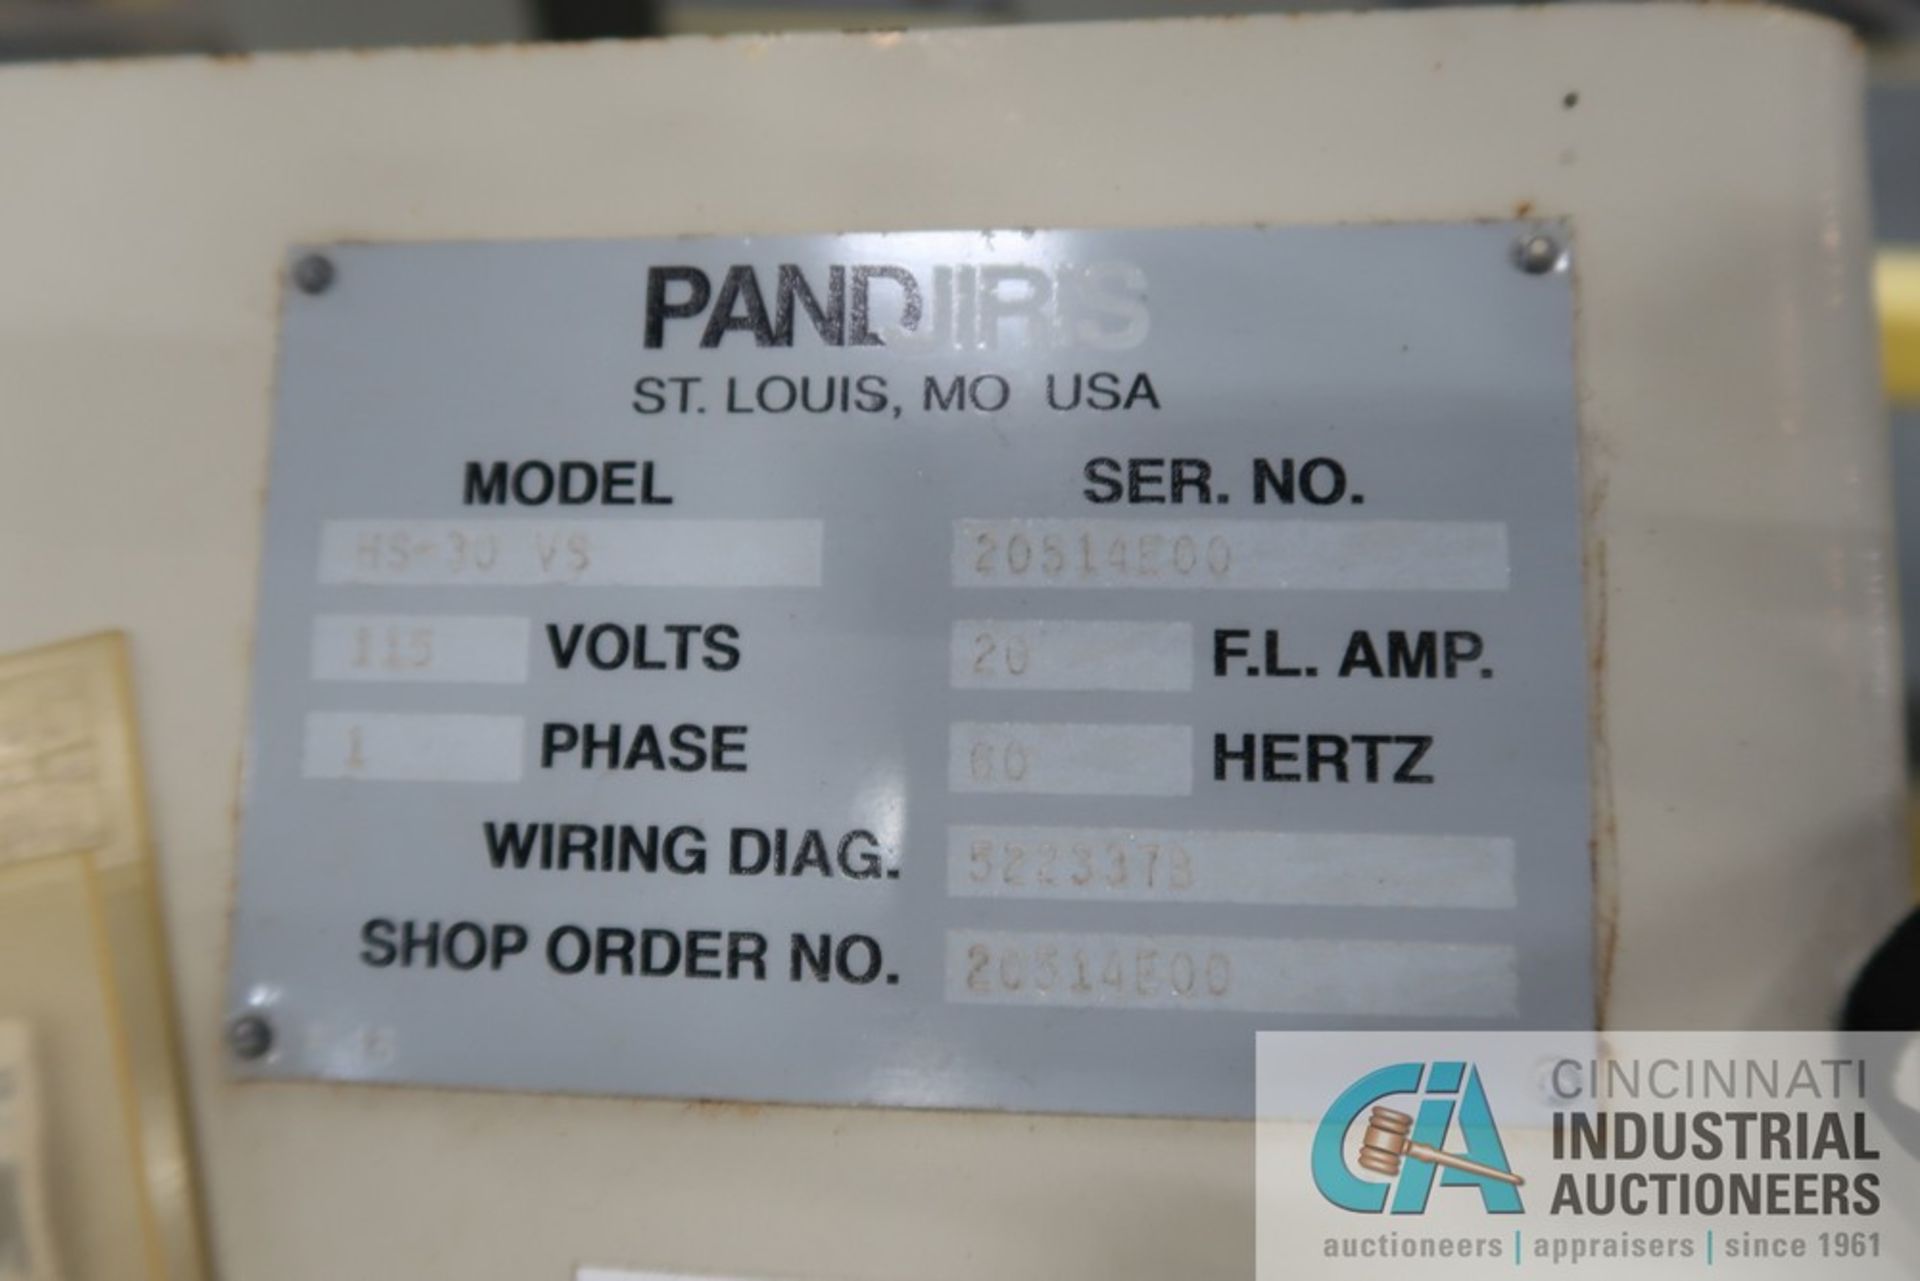 PANDJIRIS MODEL HS-30VS AND TS-30 HEADSTOCK / TAILSTOCK UNIT; S/N 20514E00 HEADSTOCK, S/N 20514E00 - Image 9 of 10